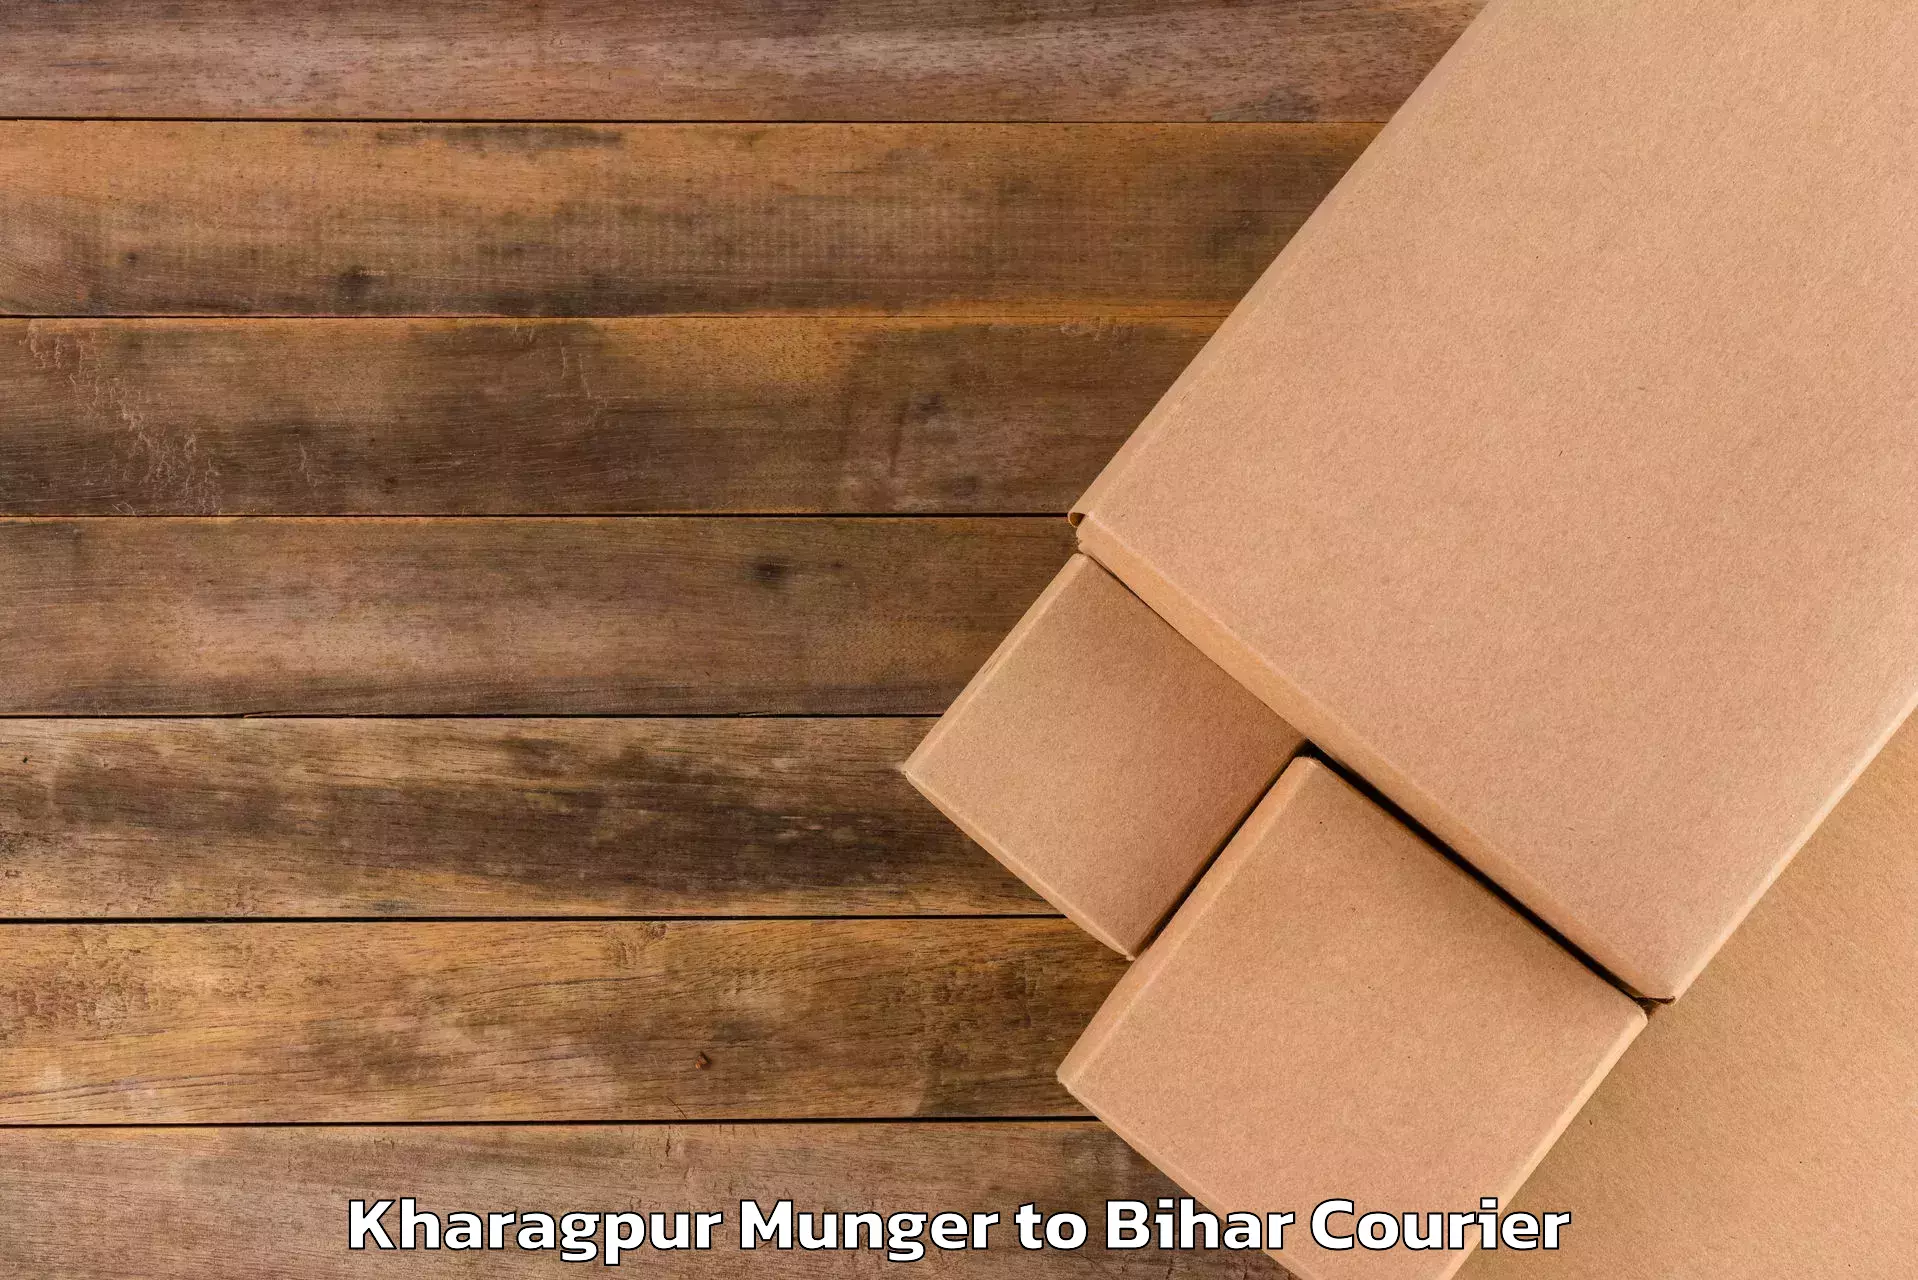 Luggage transport consultancy Kharagpur Munger to Hasanpura